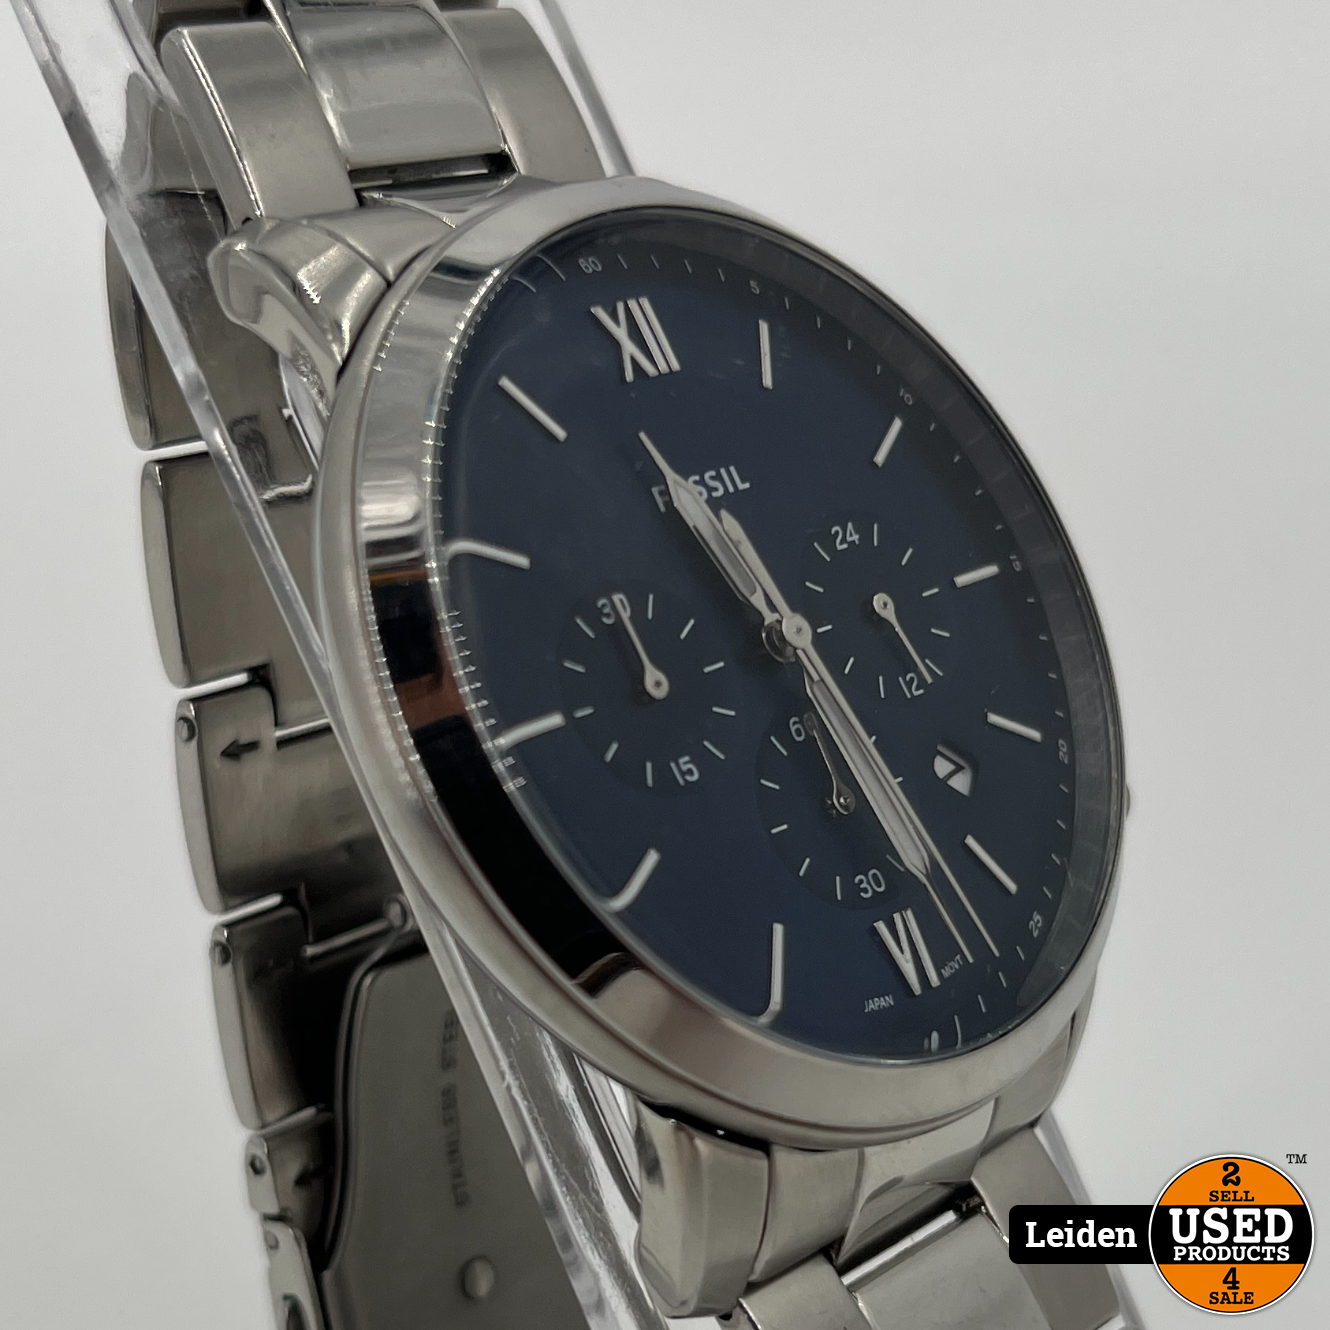 Leiden Fossil Chrono Used Horloge Products - FS5792 Neutra